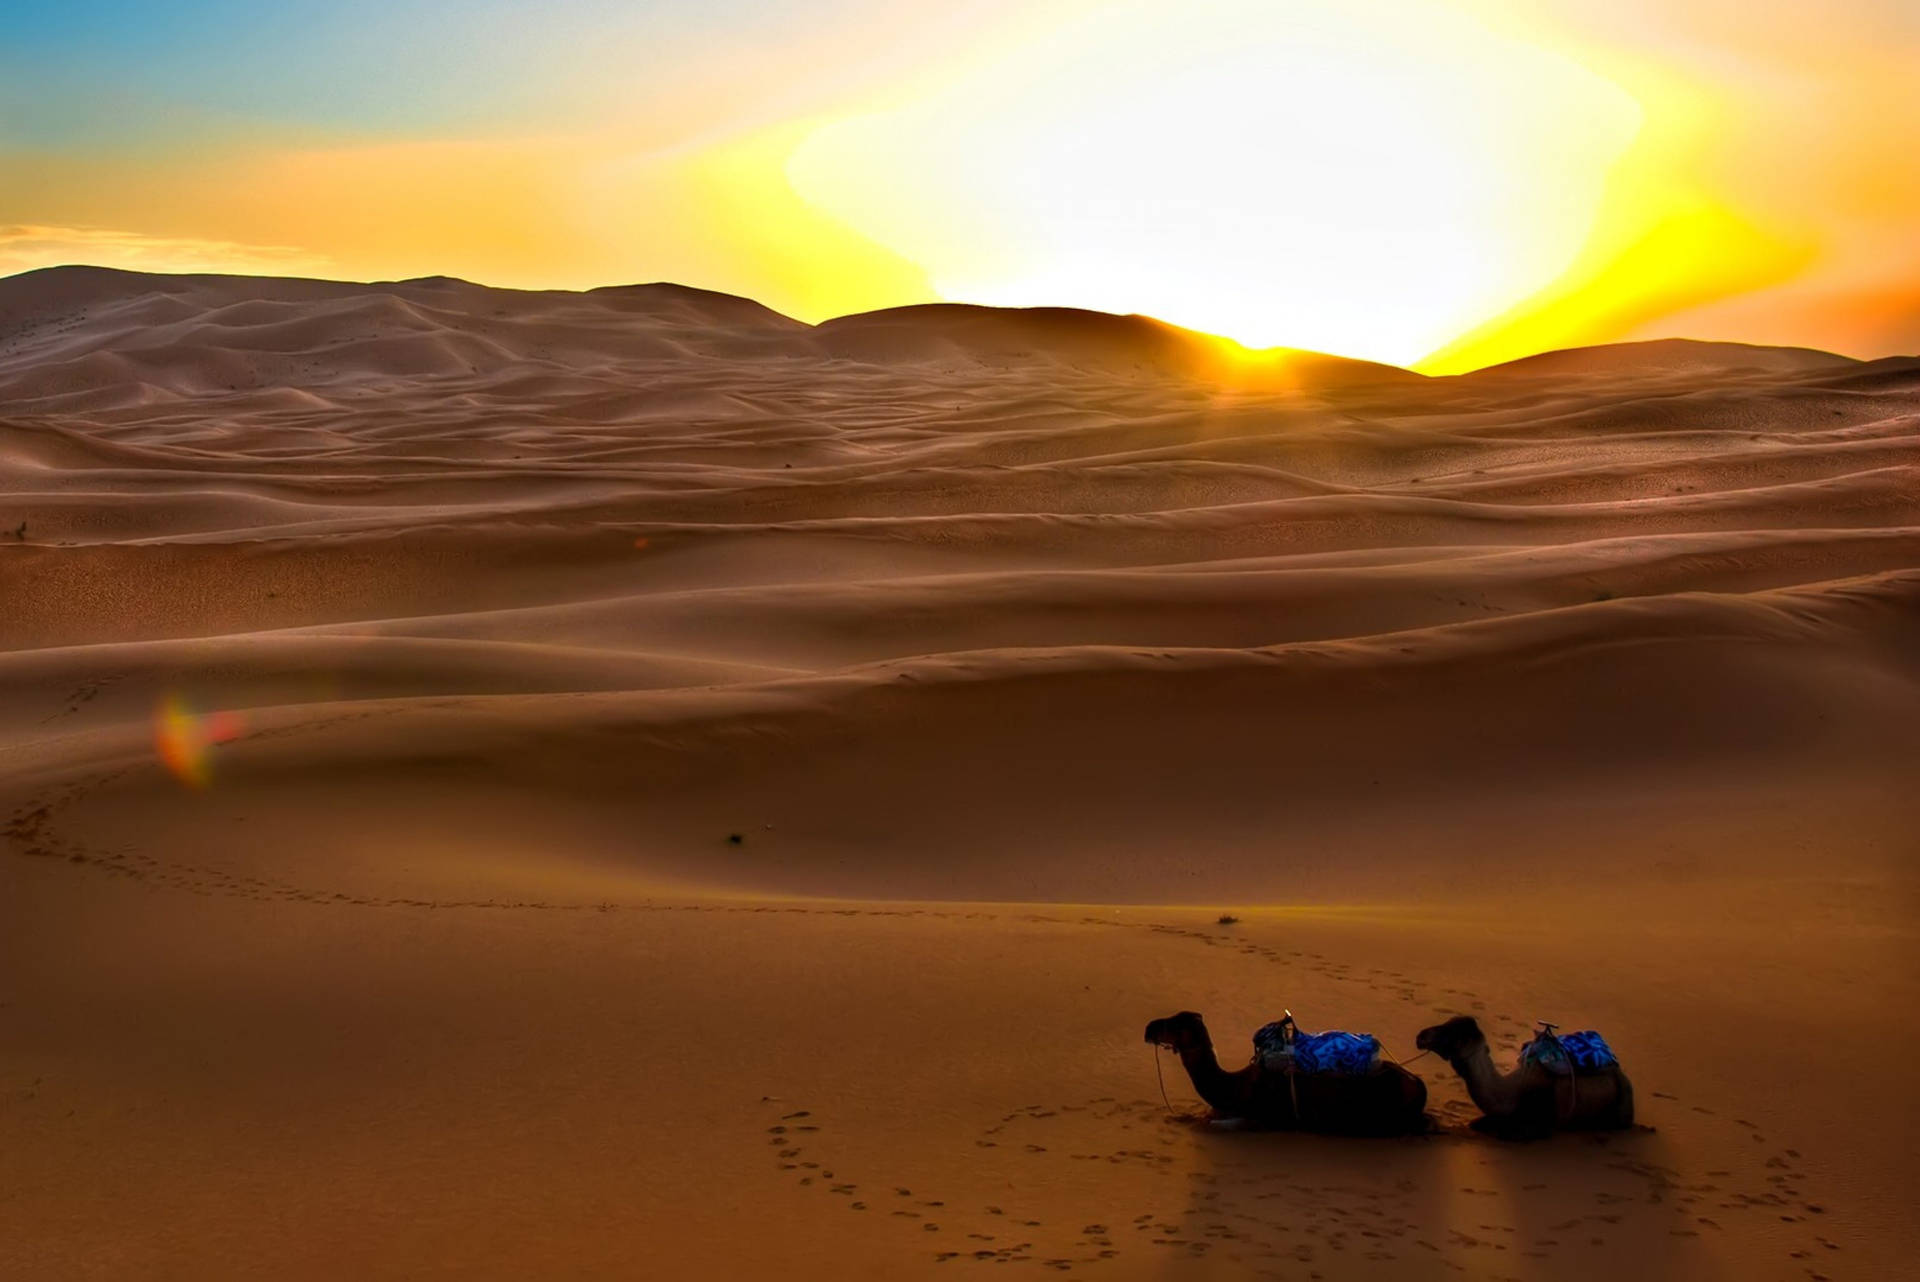 Setting Desert Sun With Camels Wallpaper